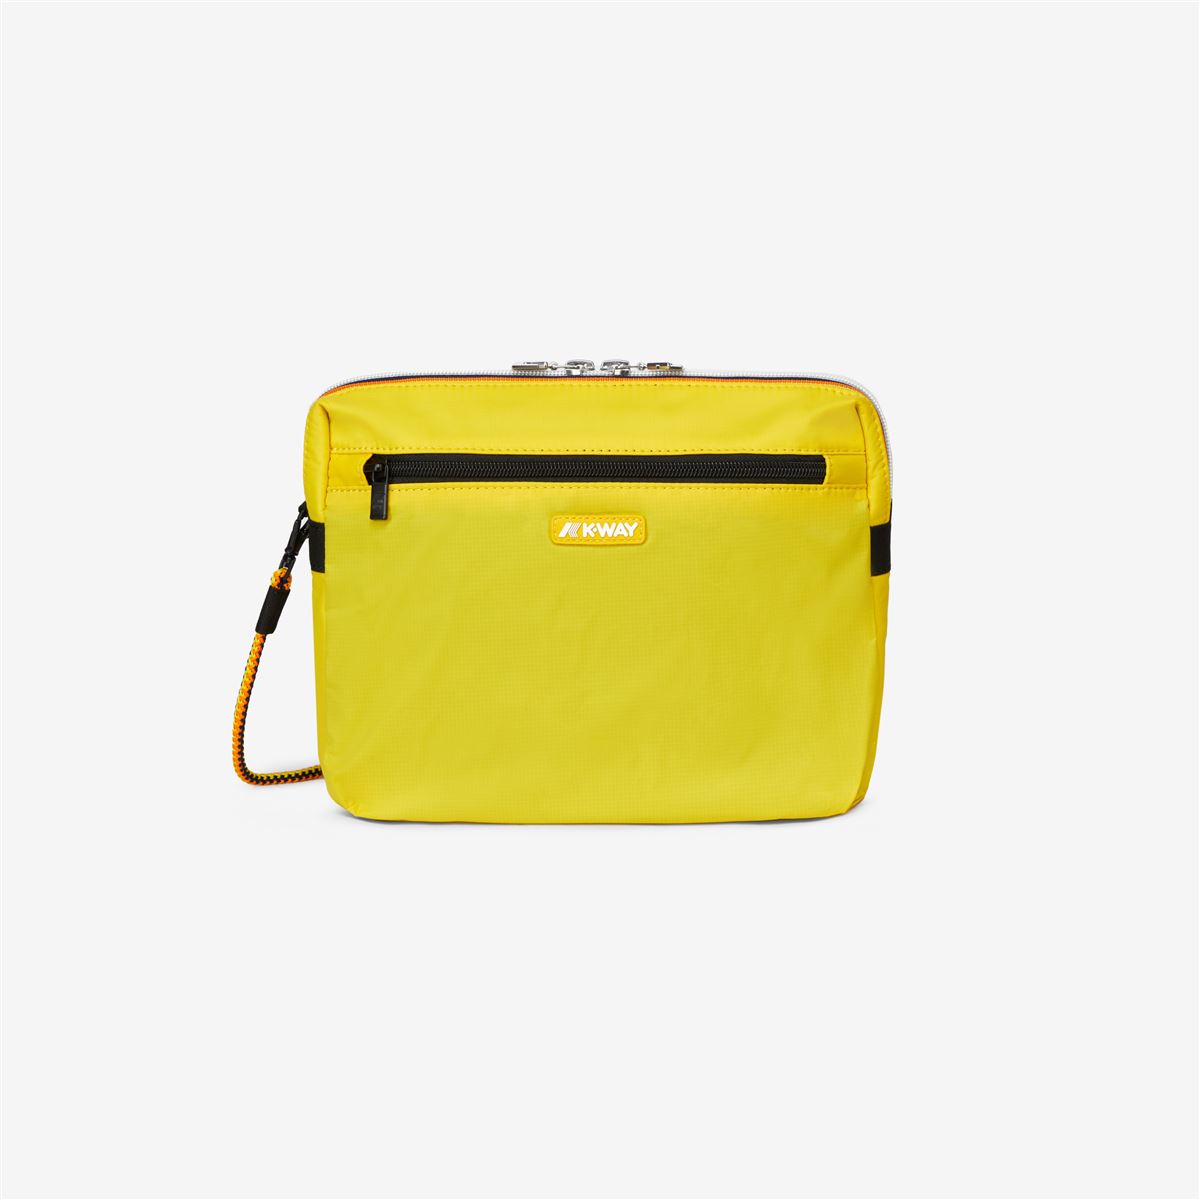 MERAL - Bag - Nylon - Unisex - Yellow Dk